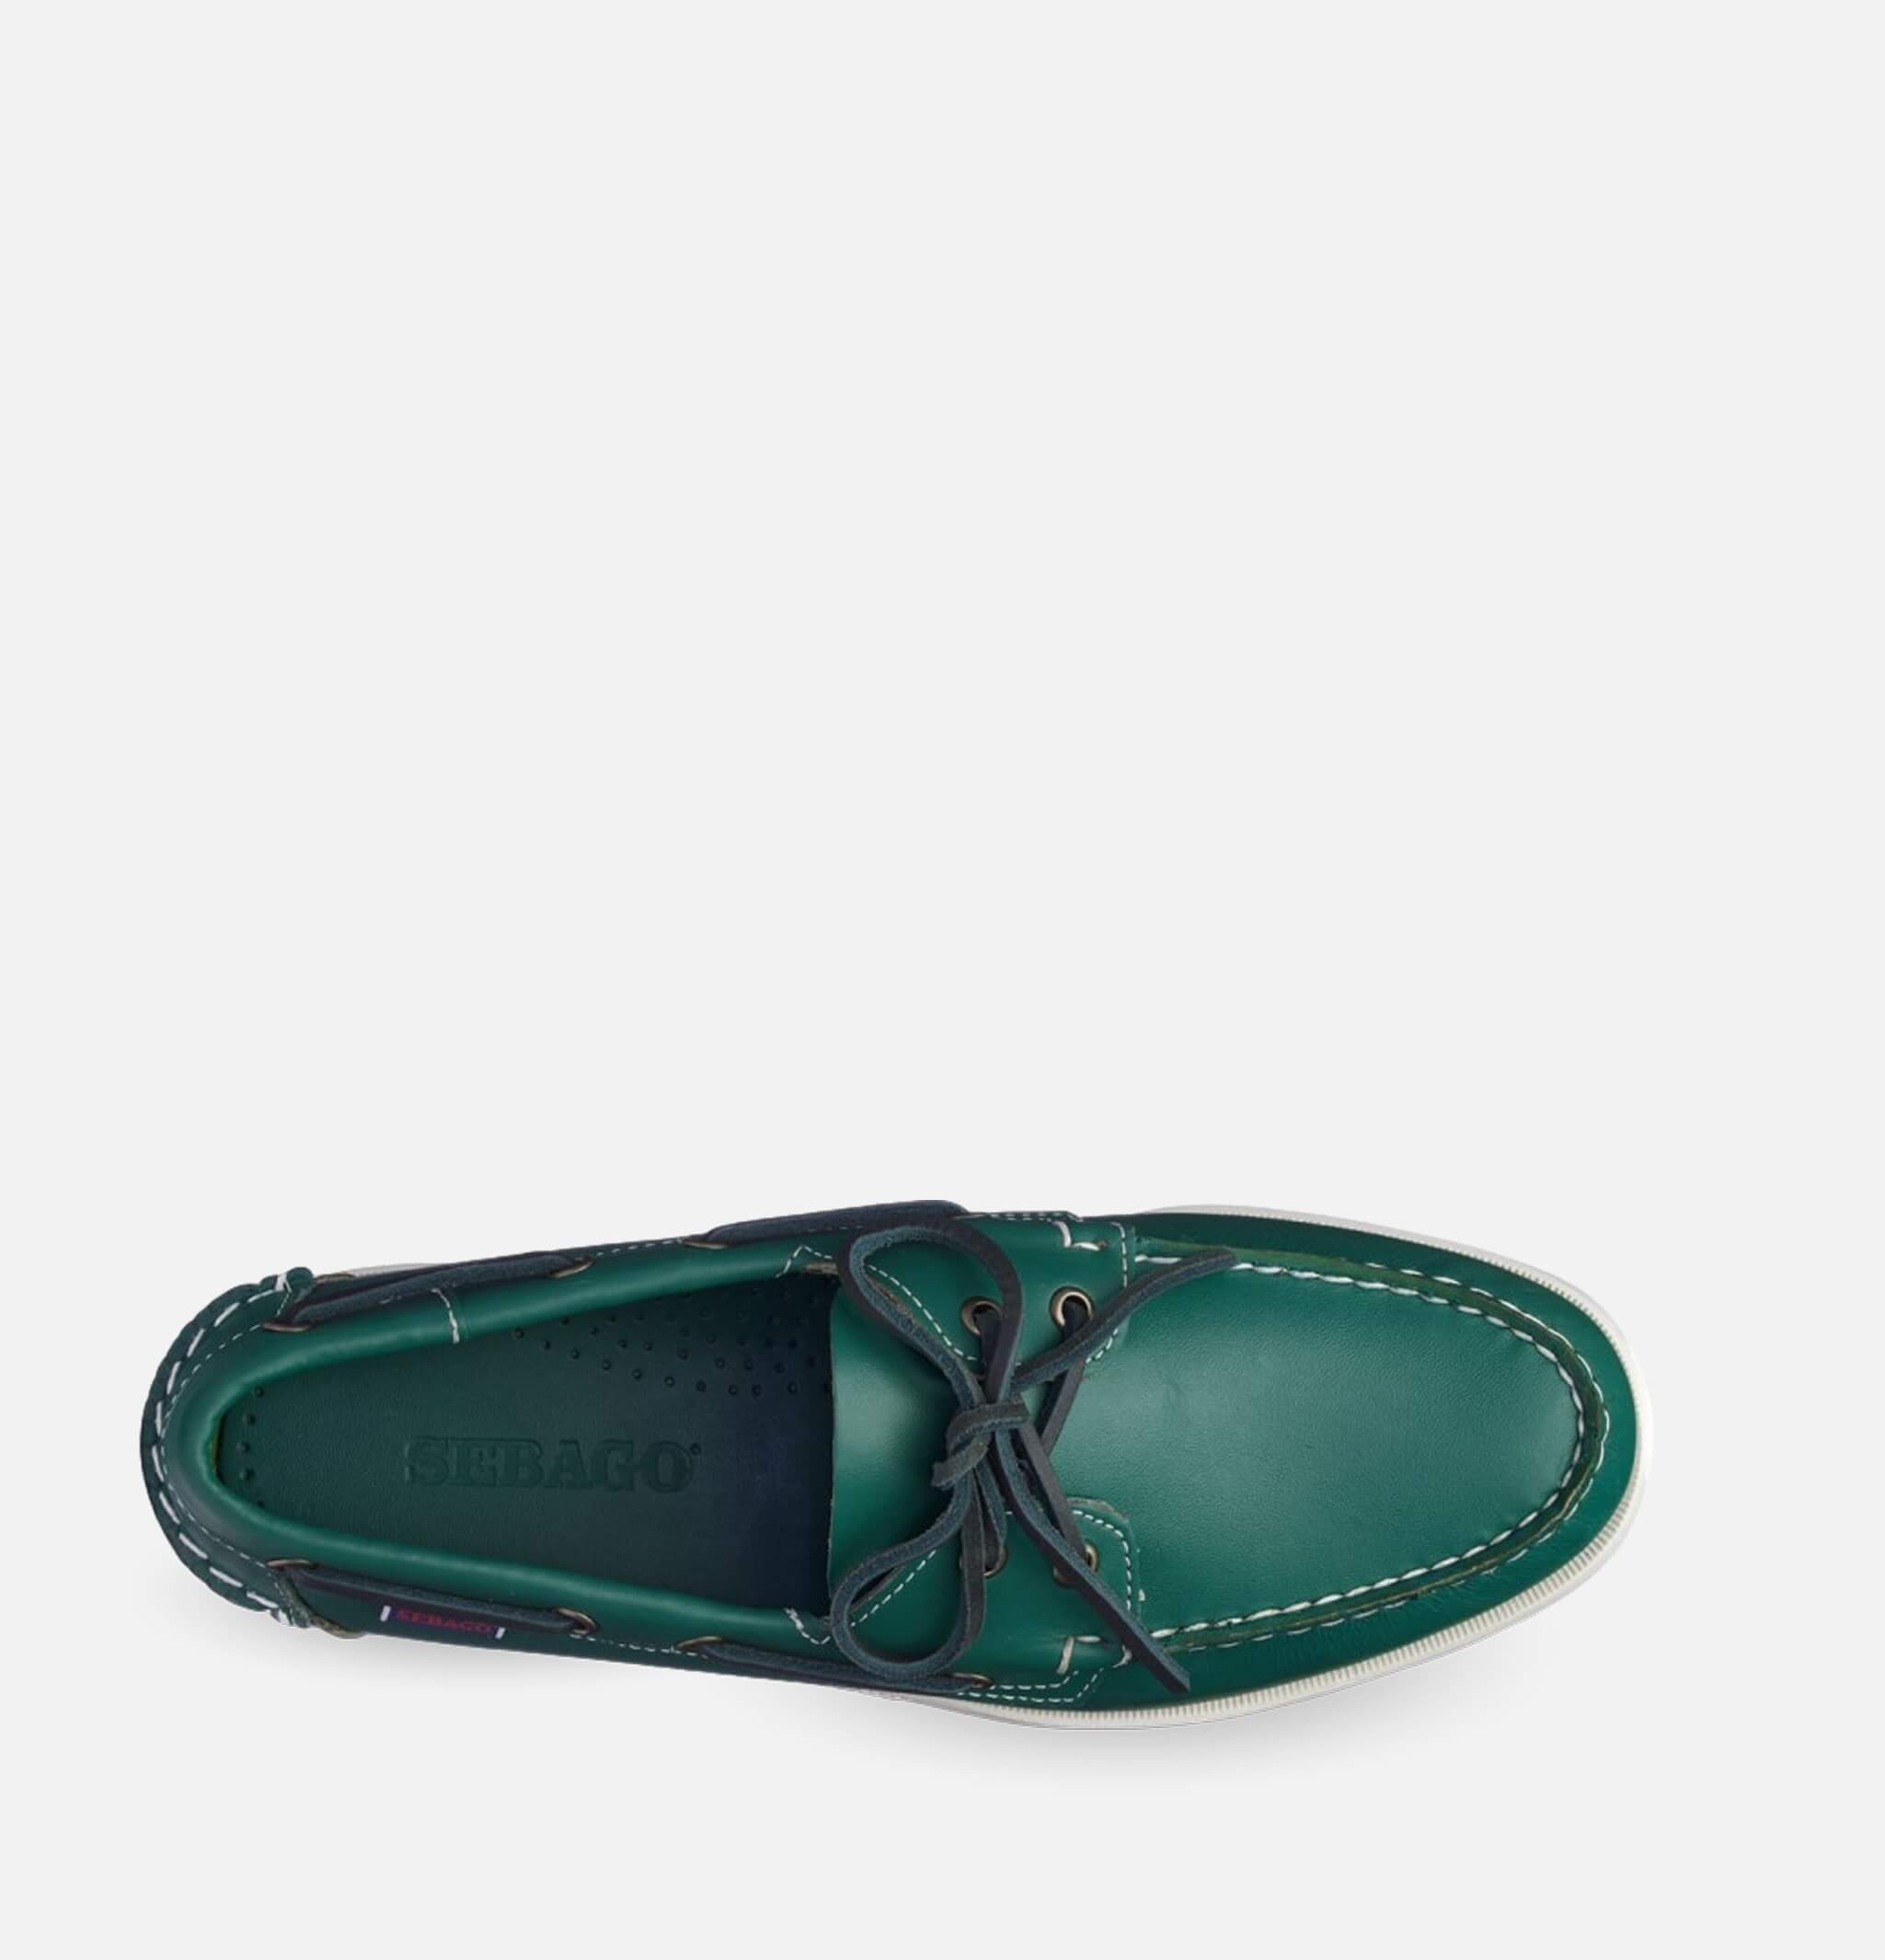 Sebago Shoes Docksides Green